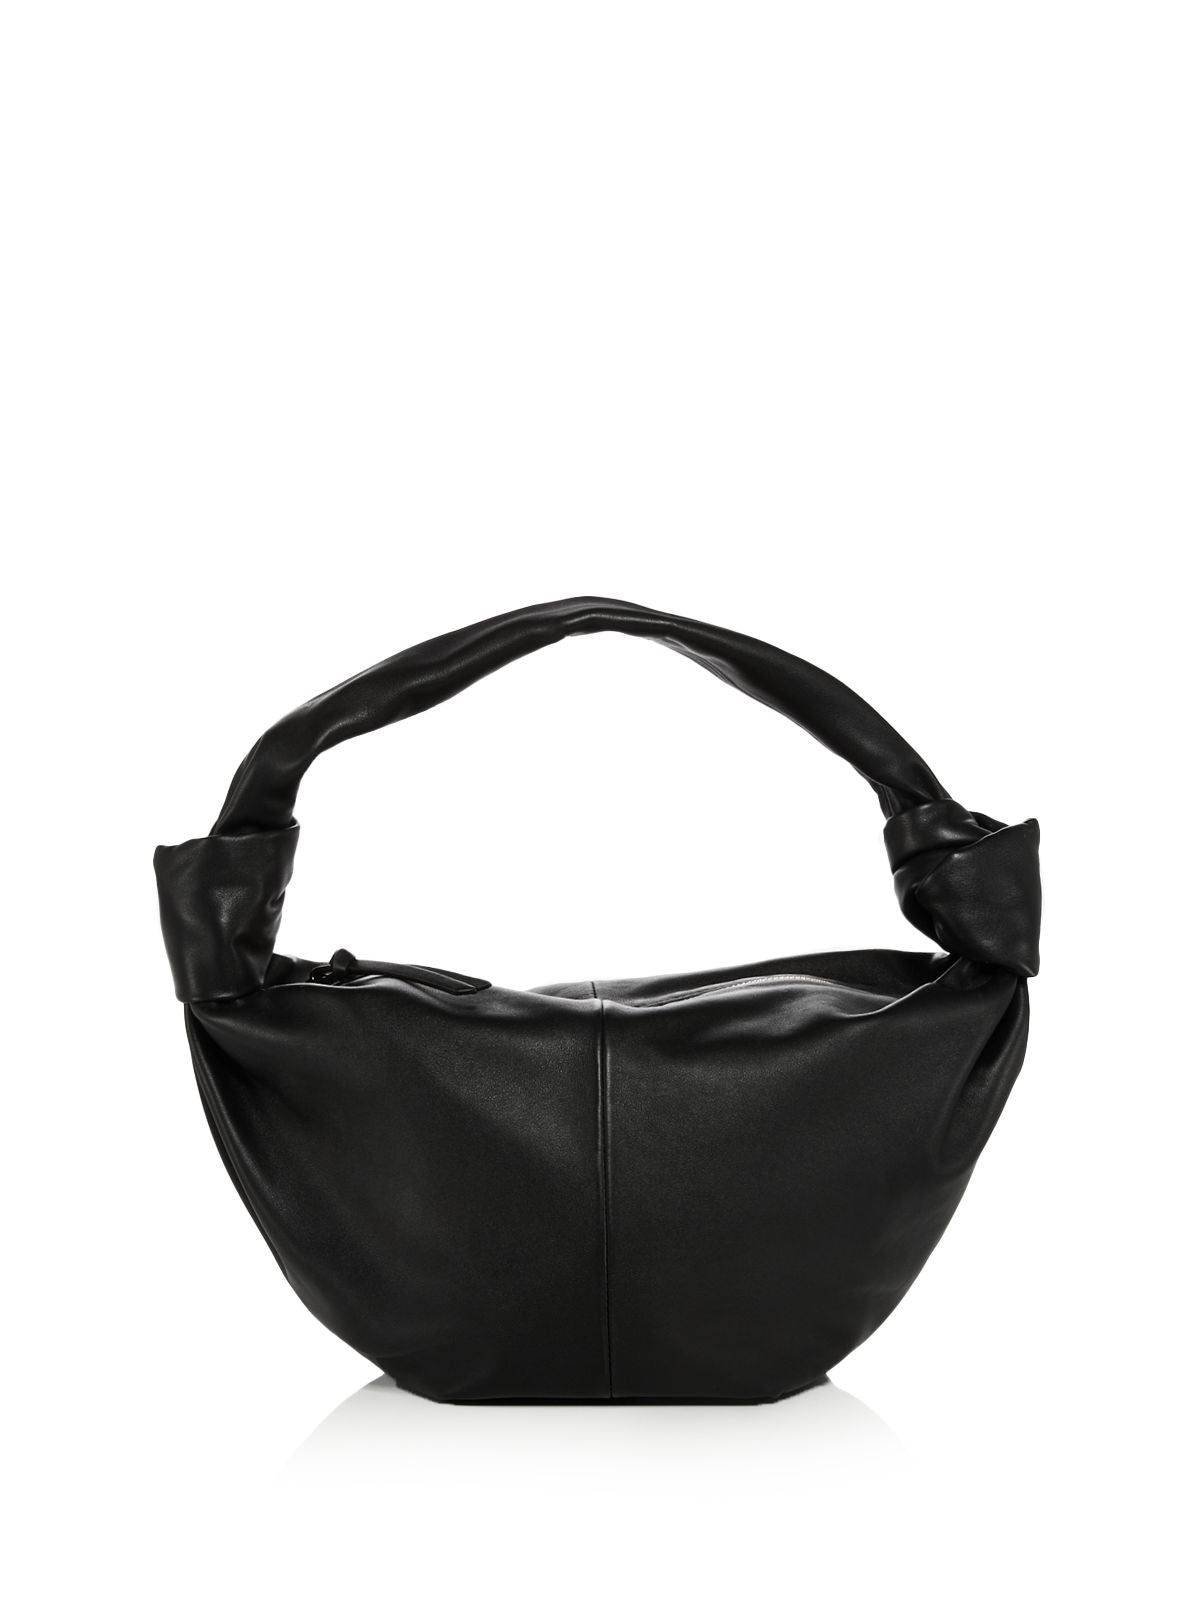 BOTTEGA VENETA Women's Black Solid Leather Double Knot Single Strap Hobo Handbag Purse